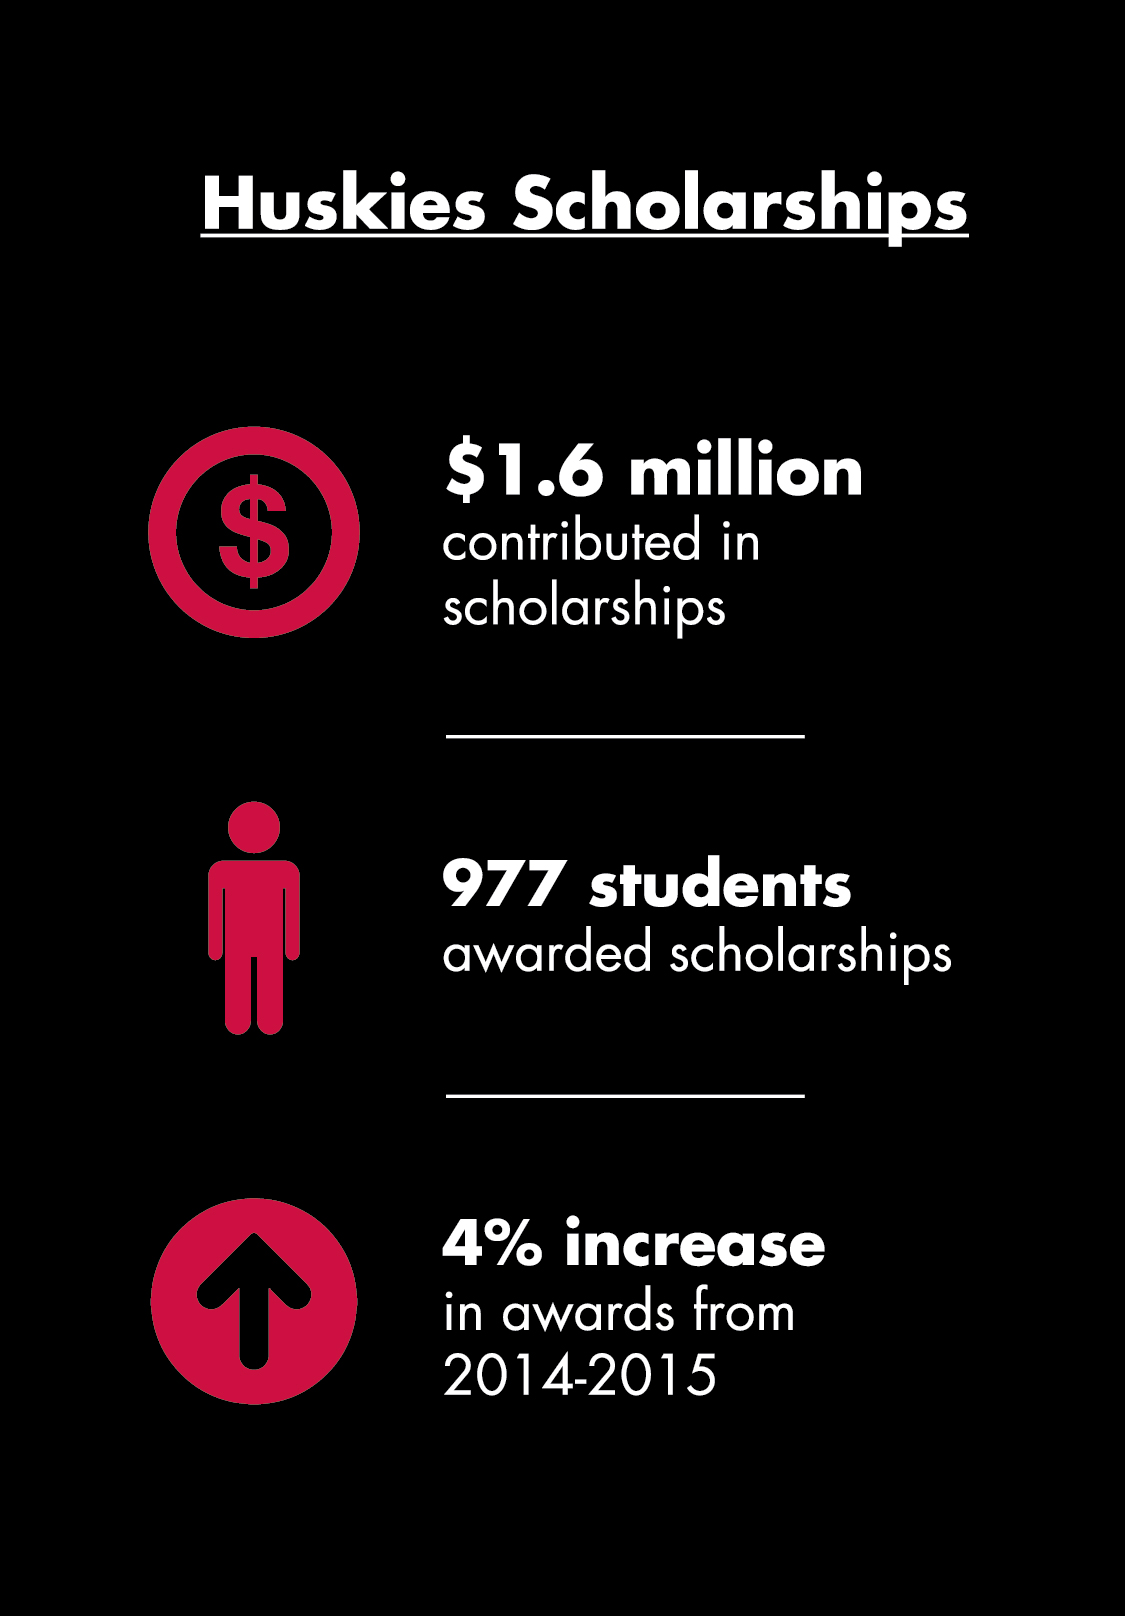 Huskies Scholarships facts graphic